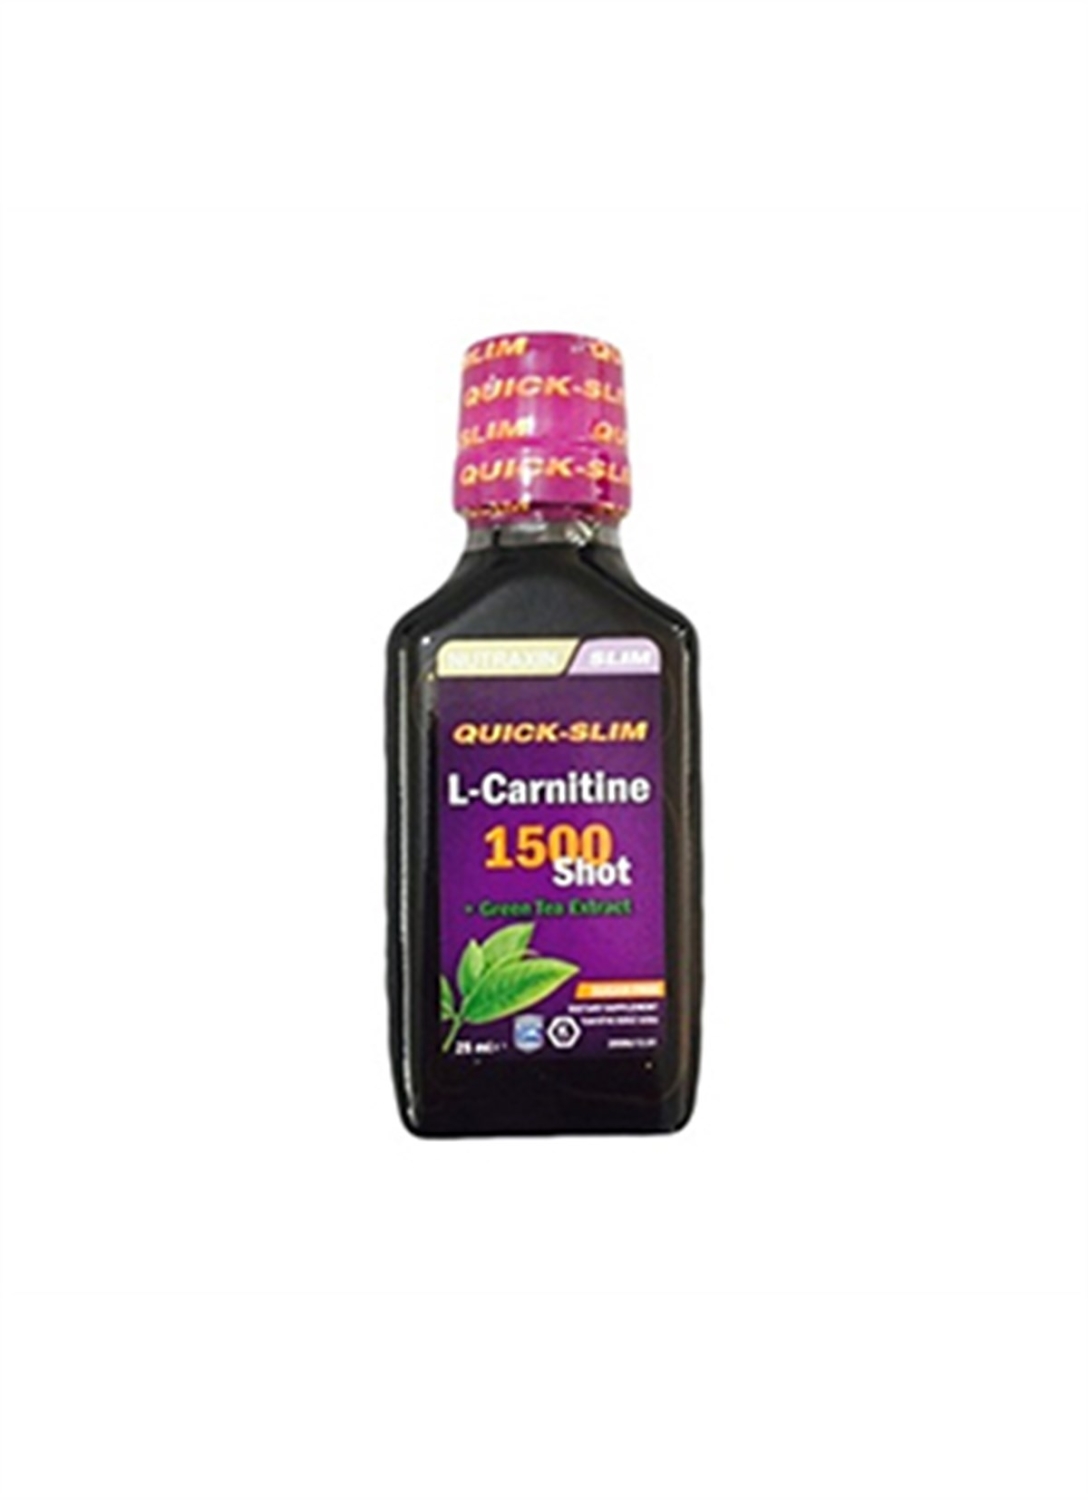 Nutraxin Quick-Slim L-Carnitine 1500 Shot 25 ml - 1